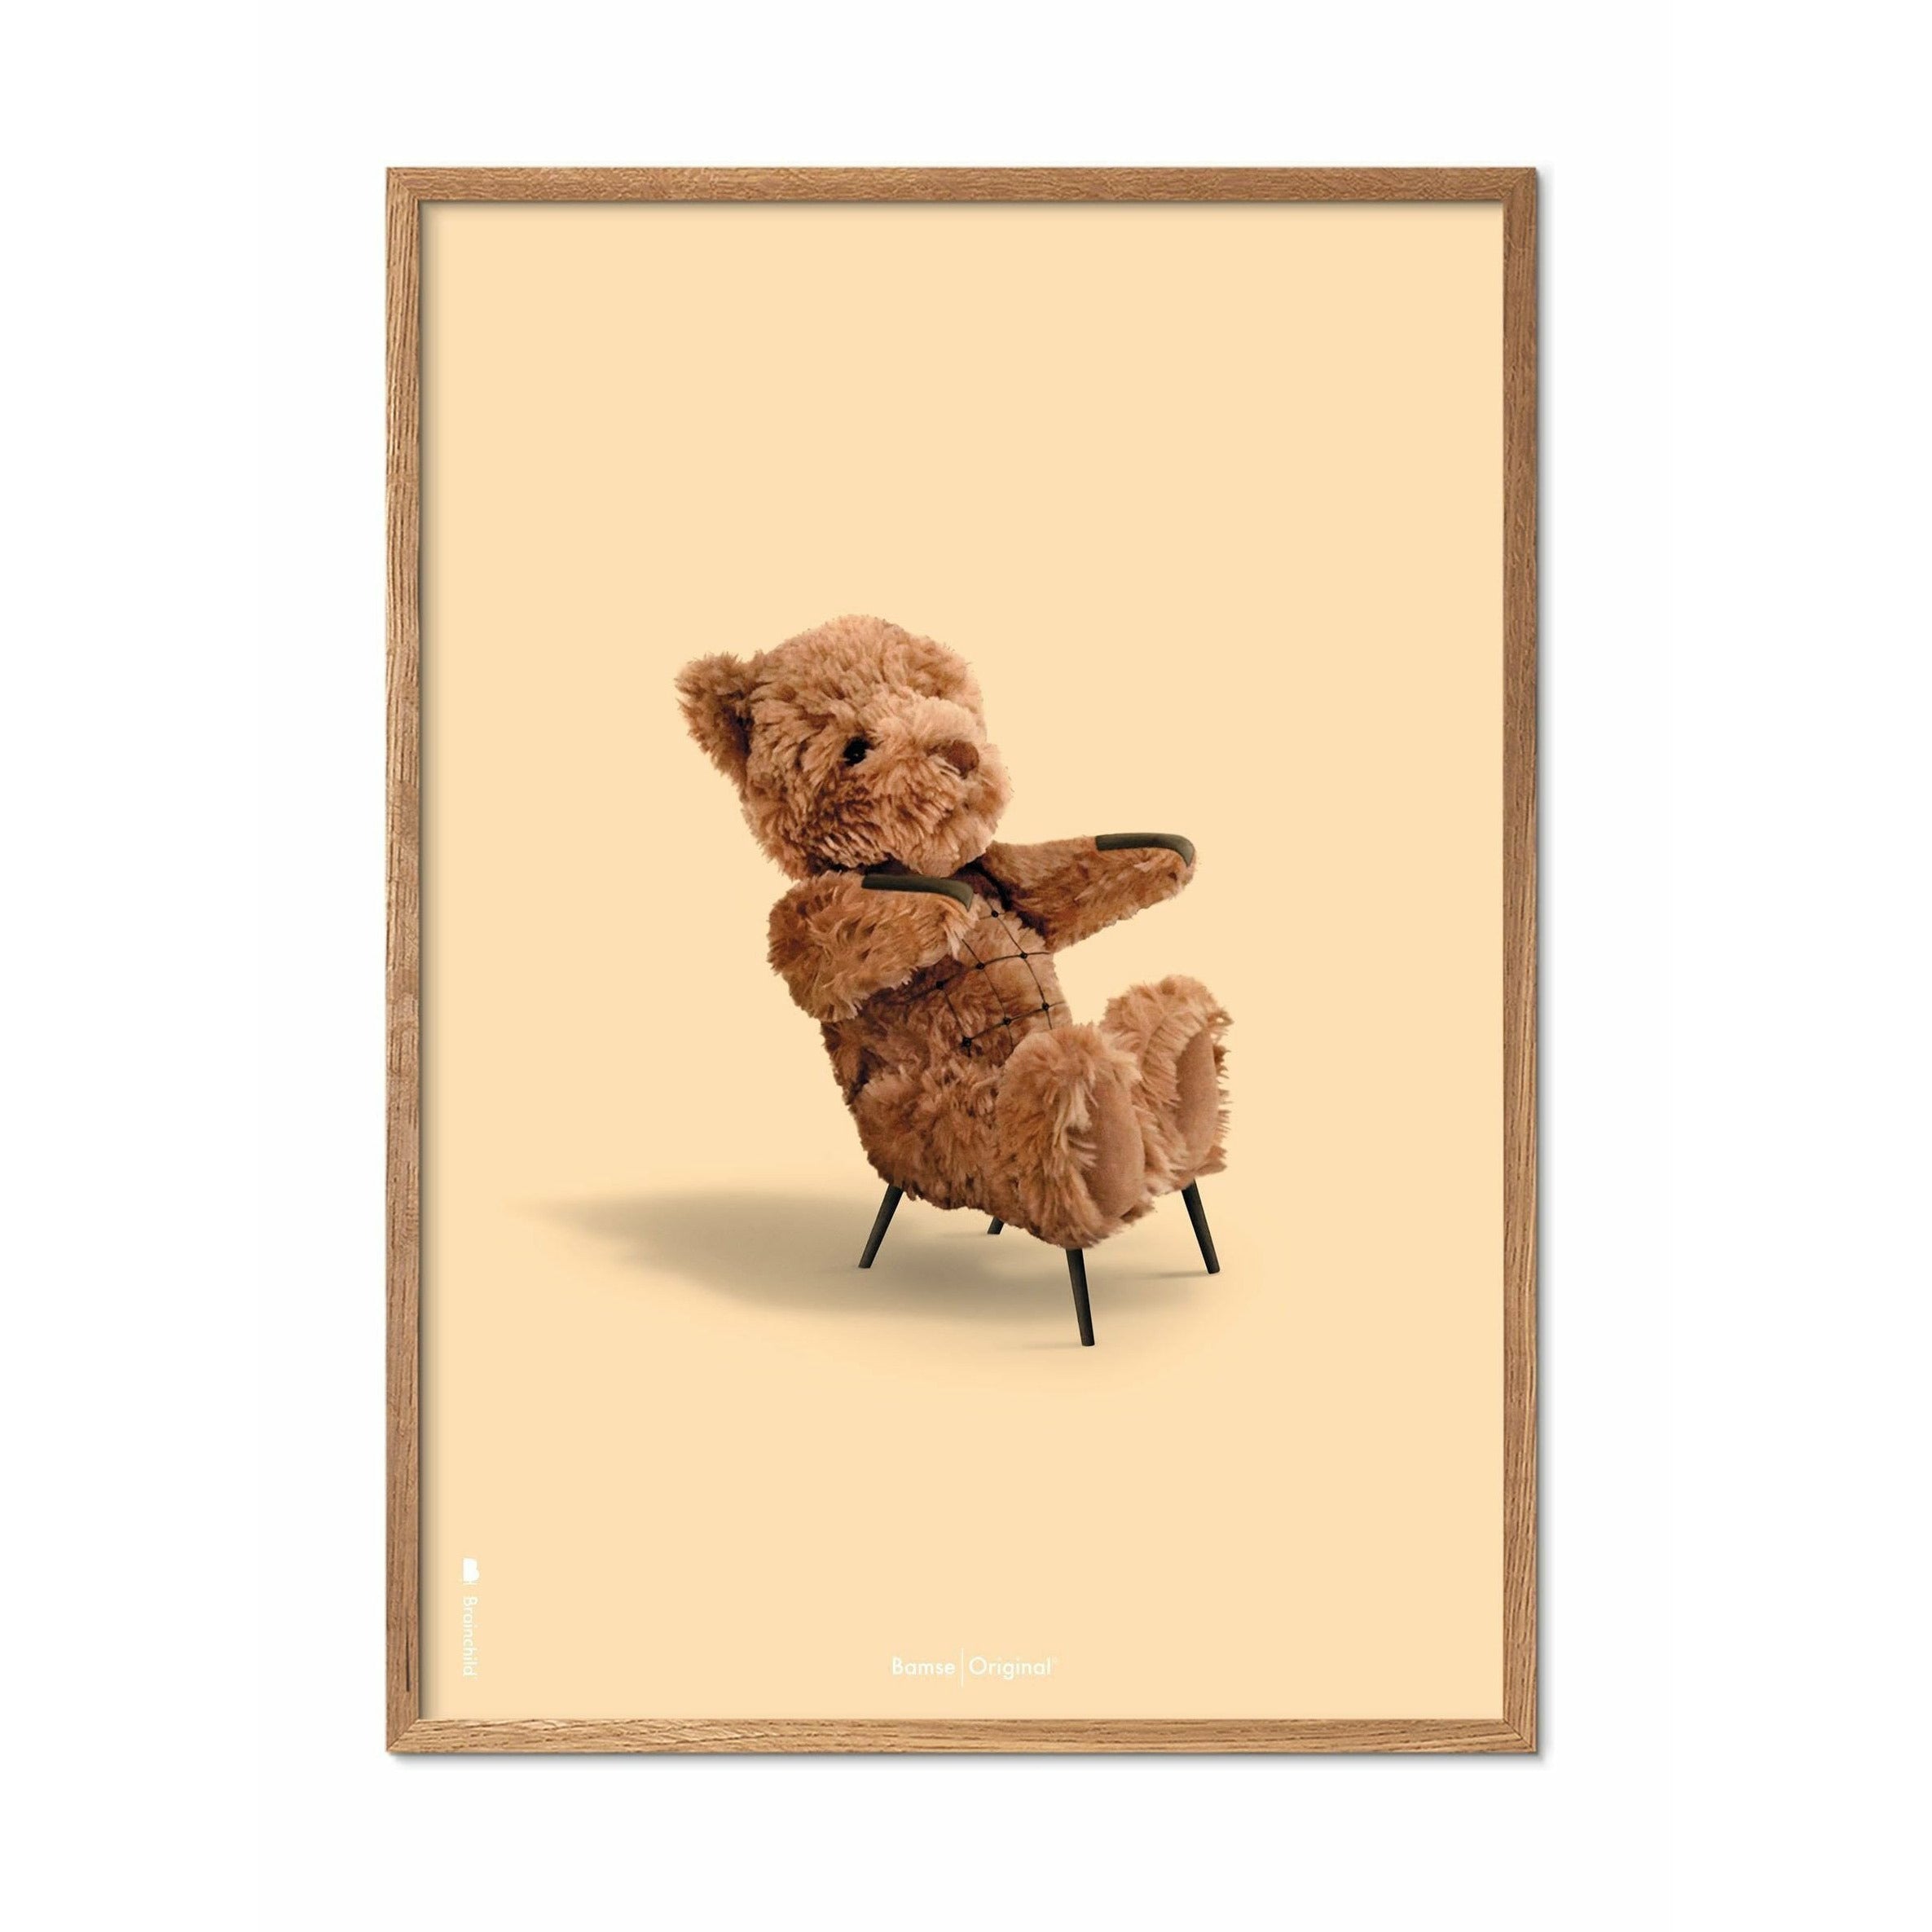 Brainchild Teddy Bear Classic plakat, ramme lavet af let træ 70x100 cm, sandfarvet baggrund